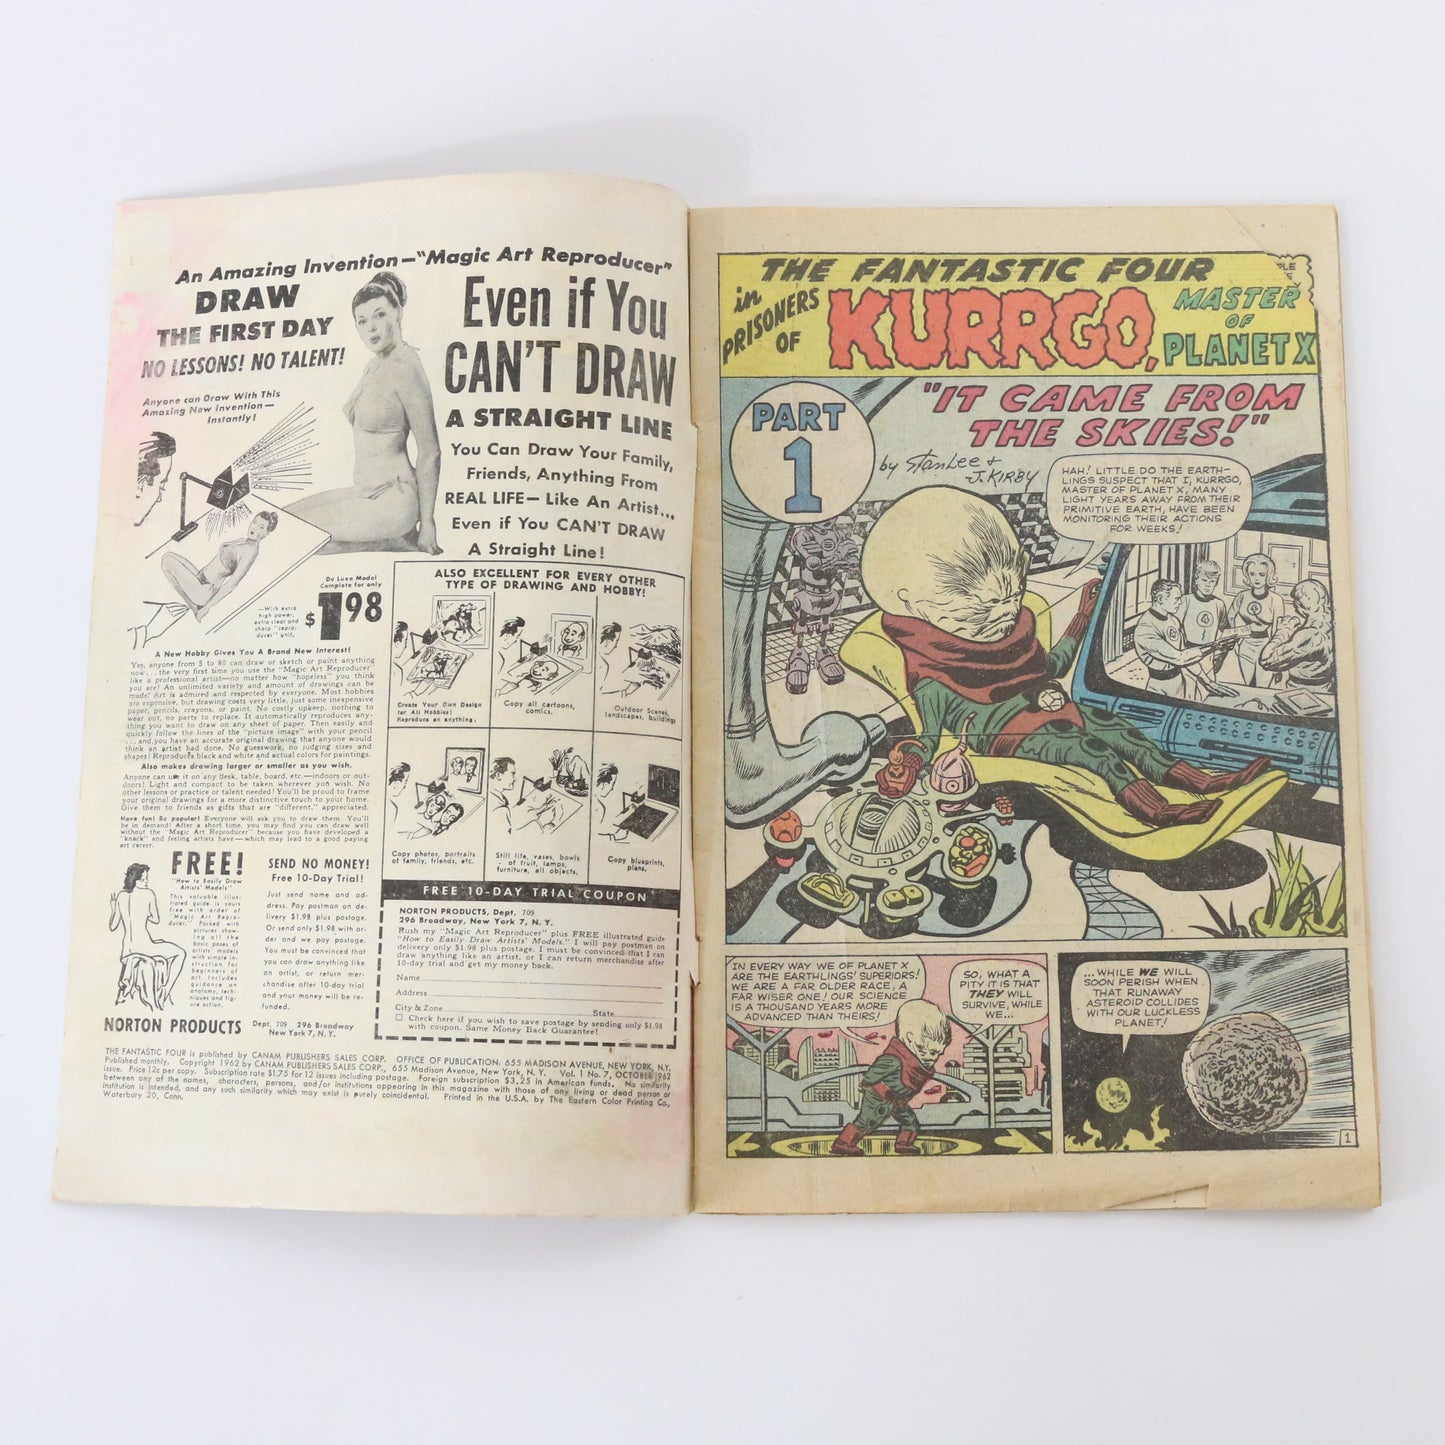 Fantastic Four #7 Prisoners Of Kurrgo Planet X Marvel Comics 12c Oct 1962